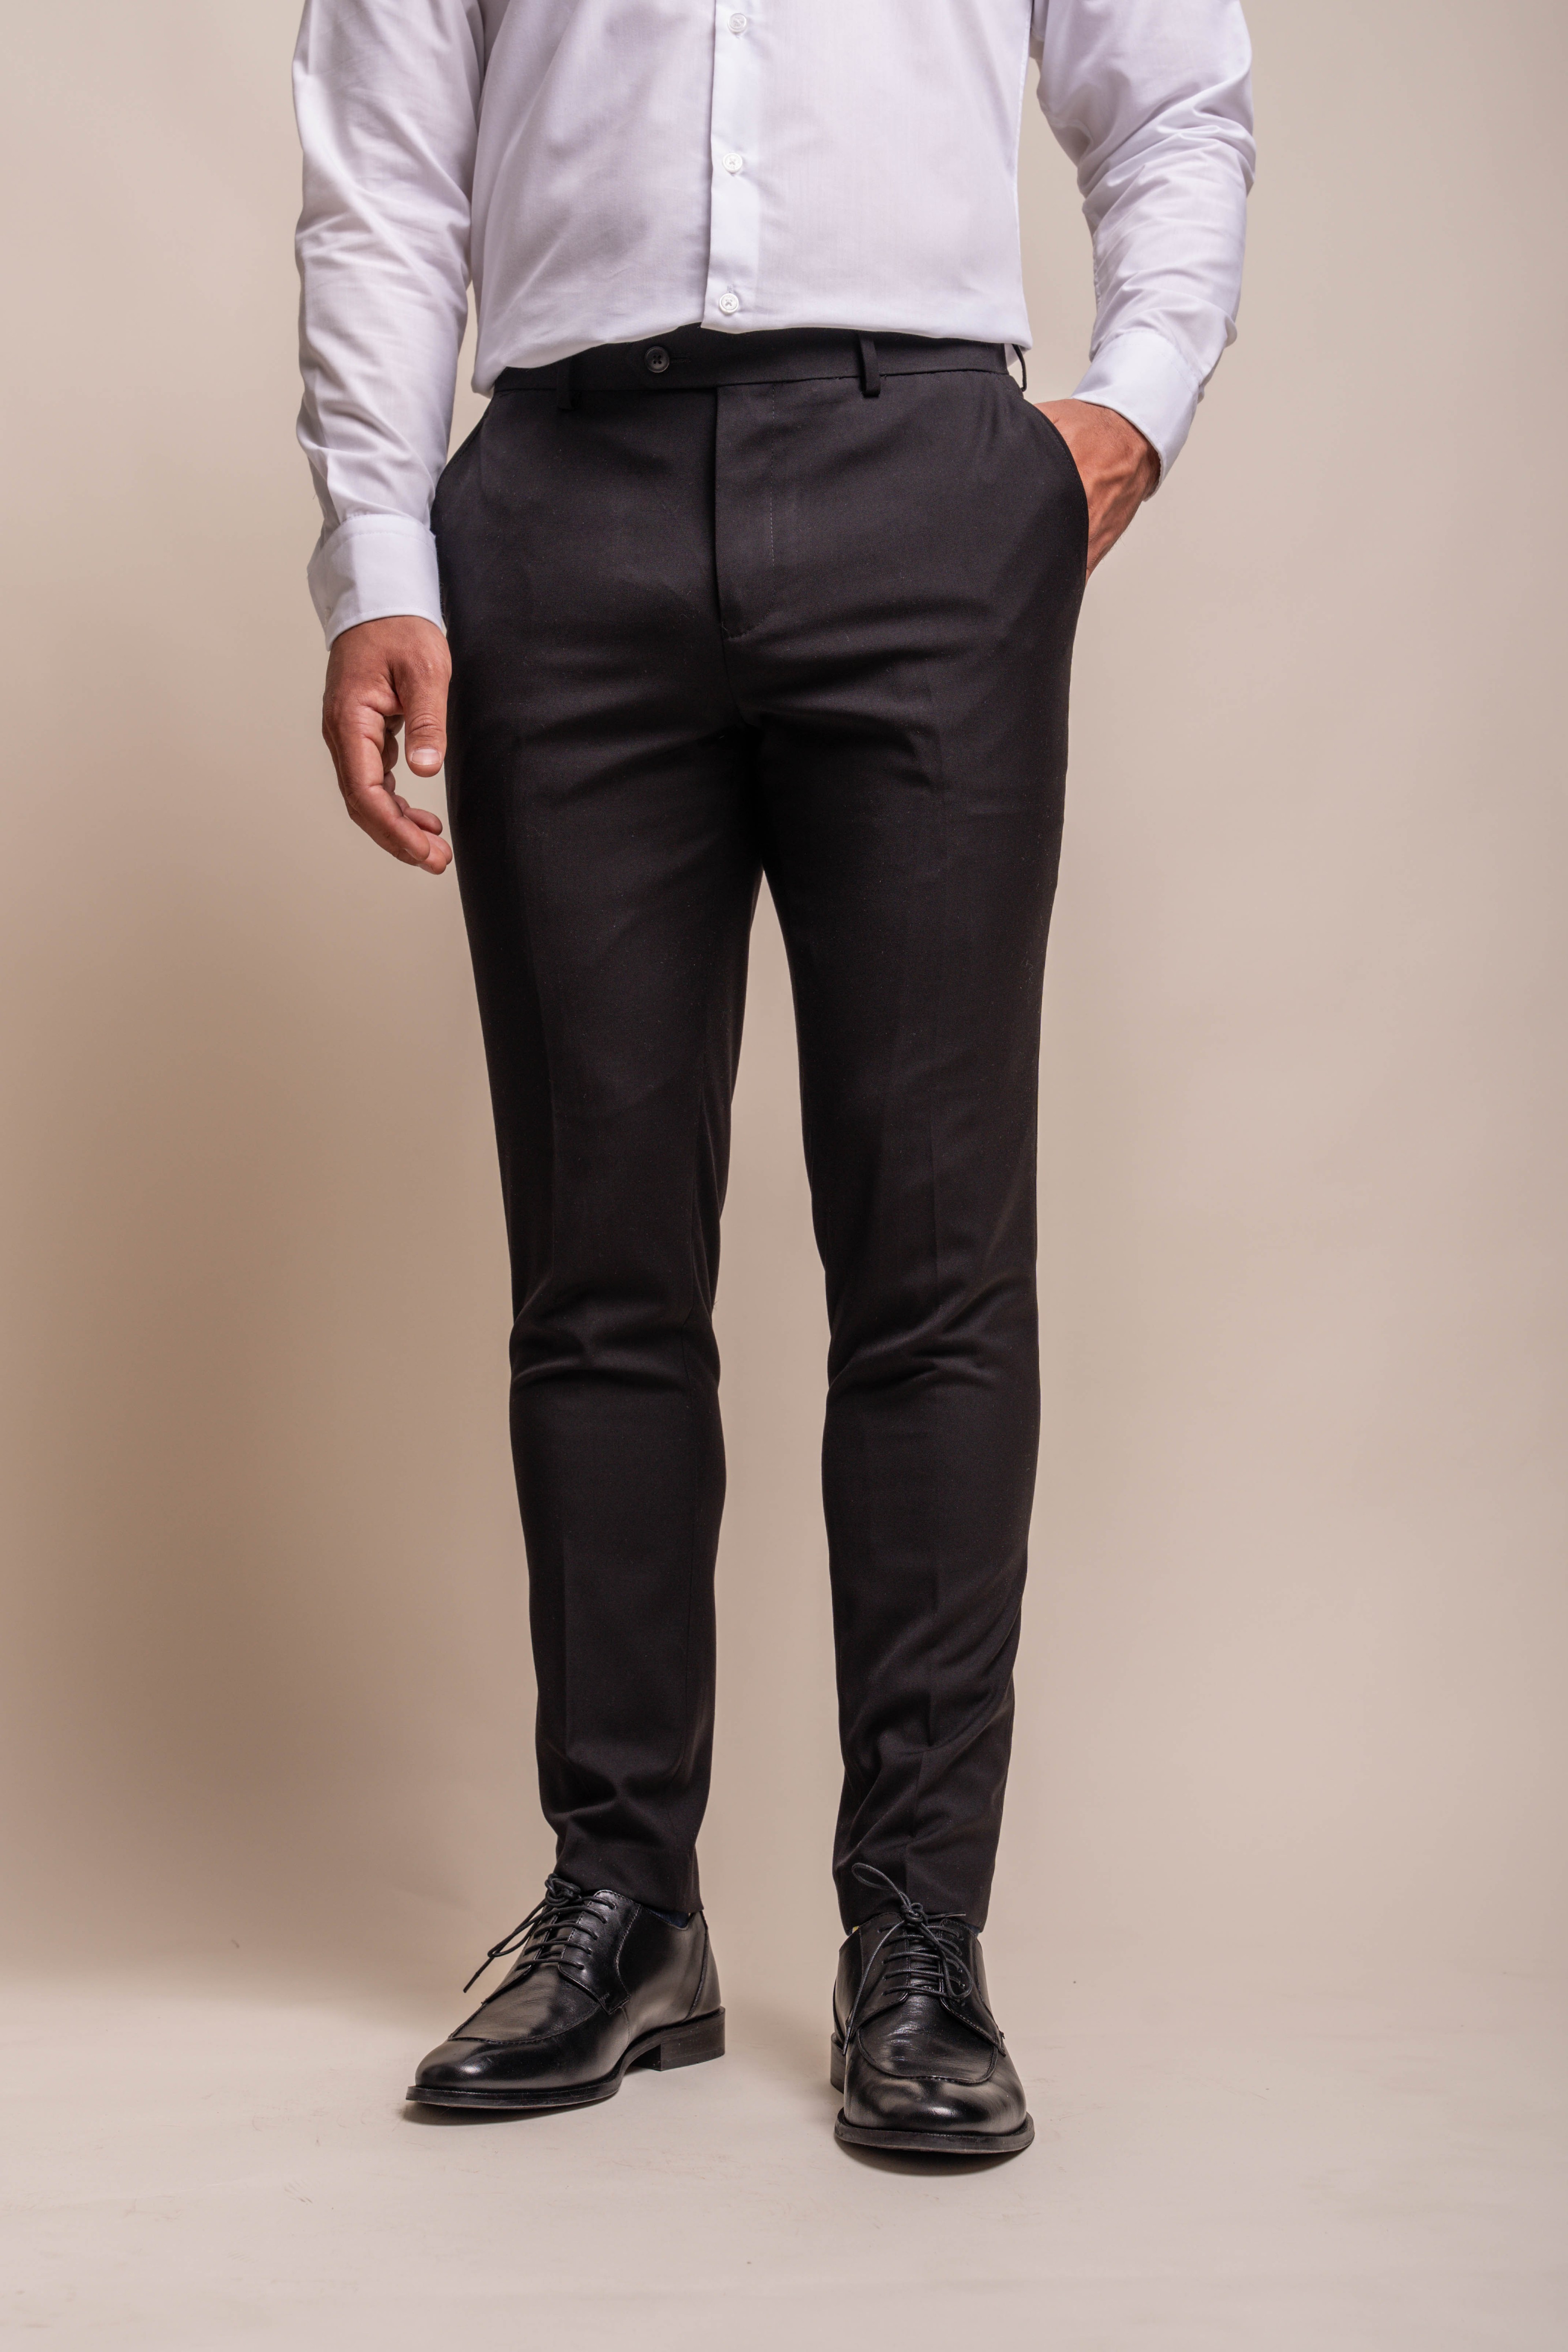 Men's Skinny Fit Black Pants- VIPER